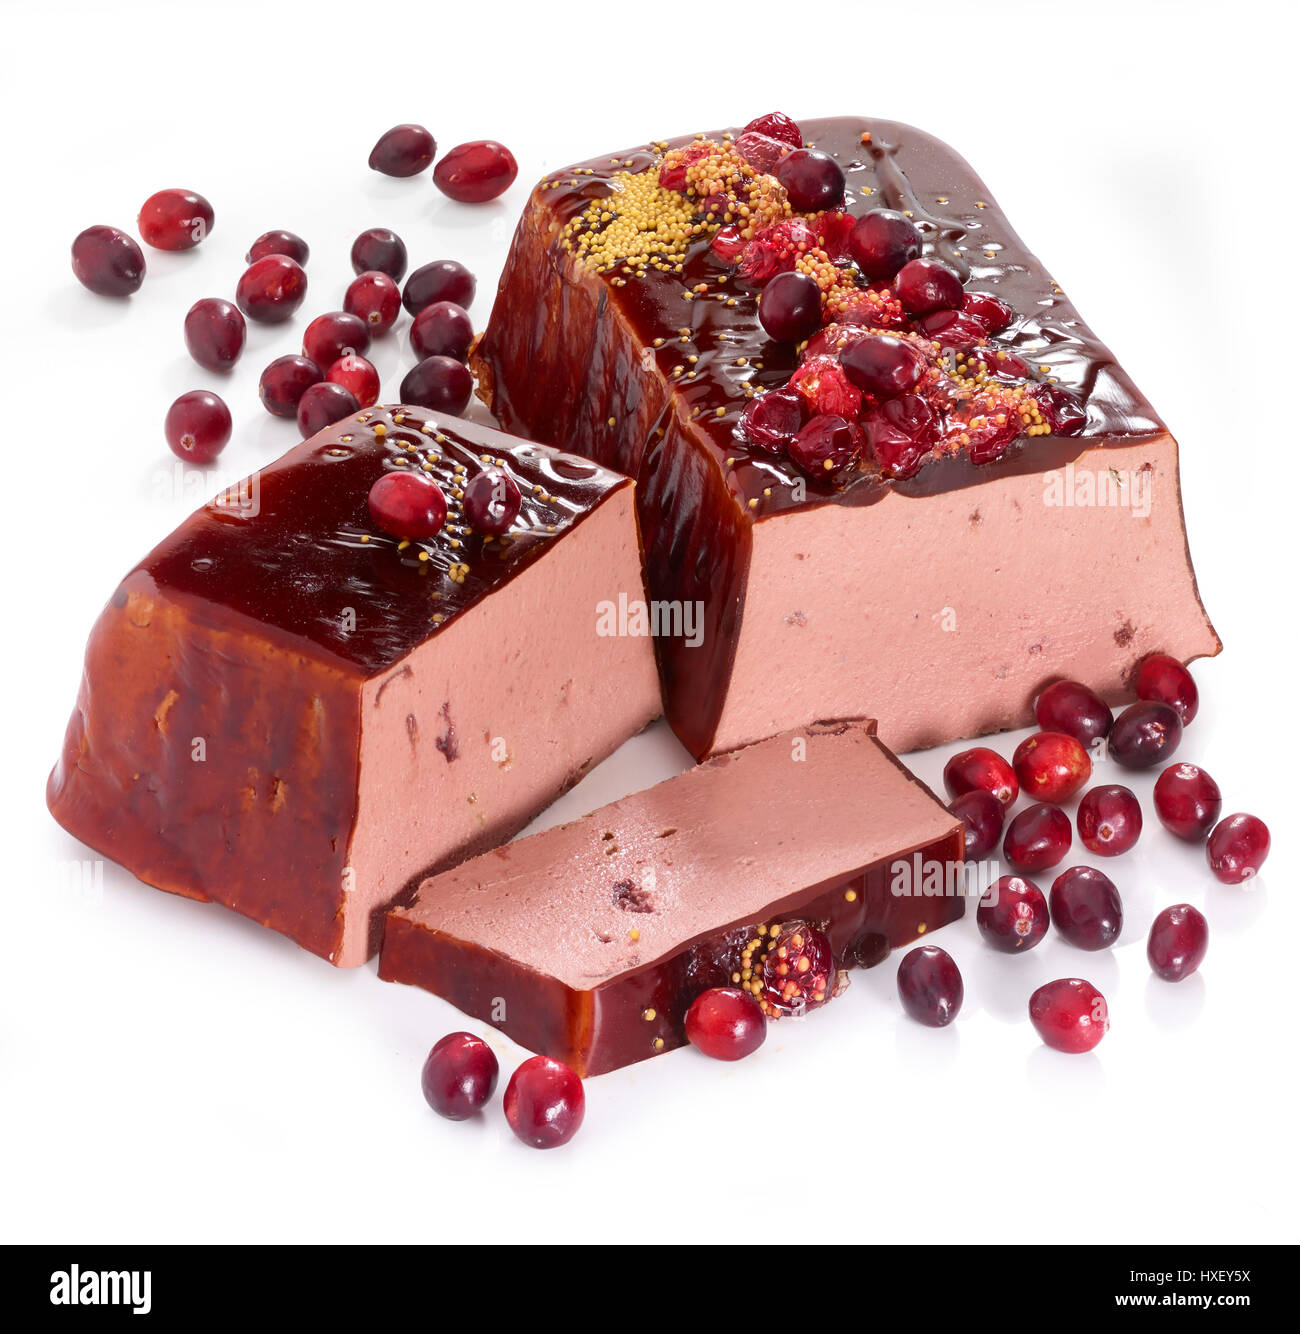 Liver Pate with Cranberries (Vaccinium macrocarpon) as decoration Stock Photo